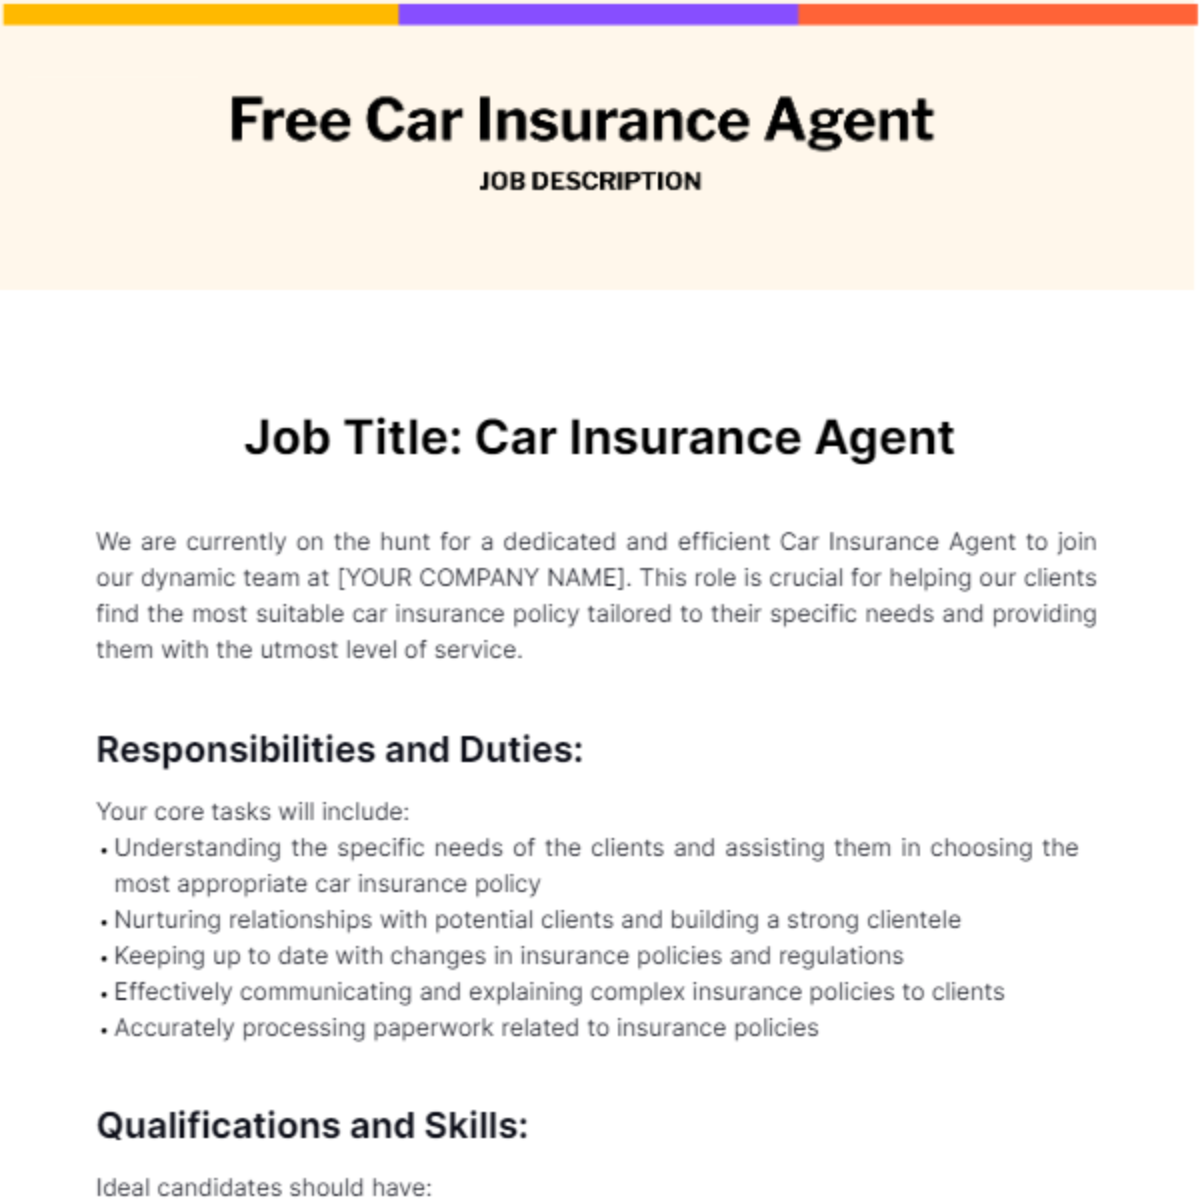 Car Insurance Agent Job Description Template